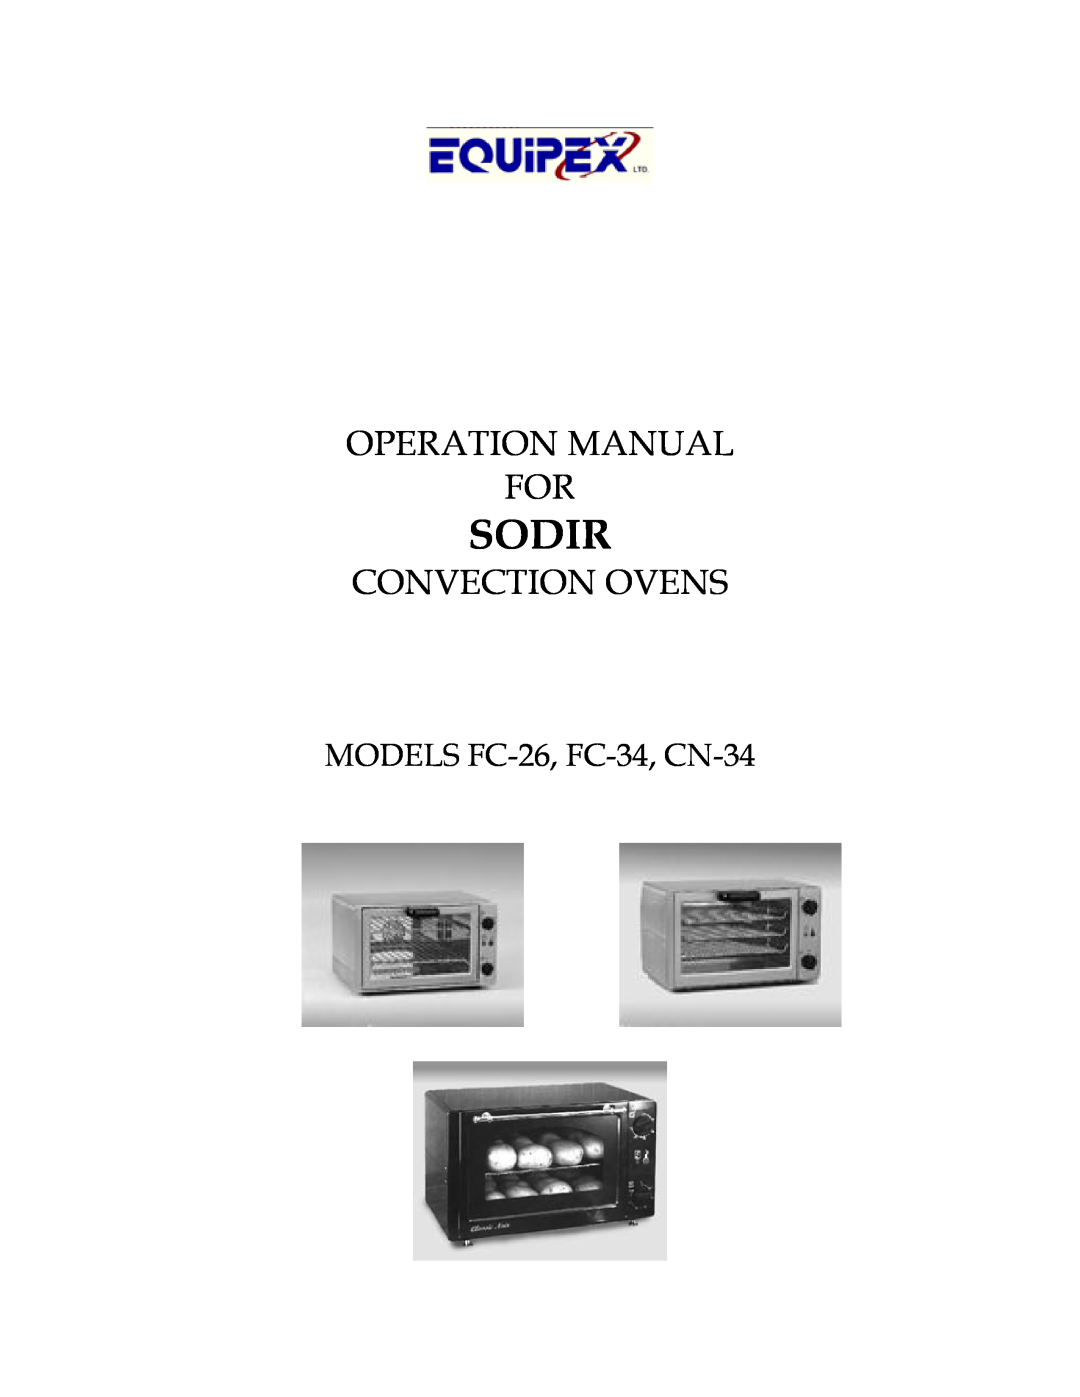 Equipex operation manual Sodir, Convection Ovens, MODELS FC-26, FC-34, CN-34 